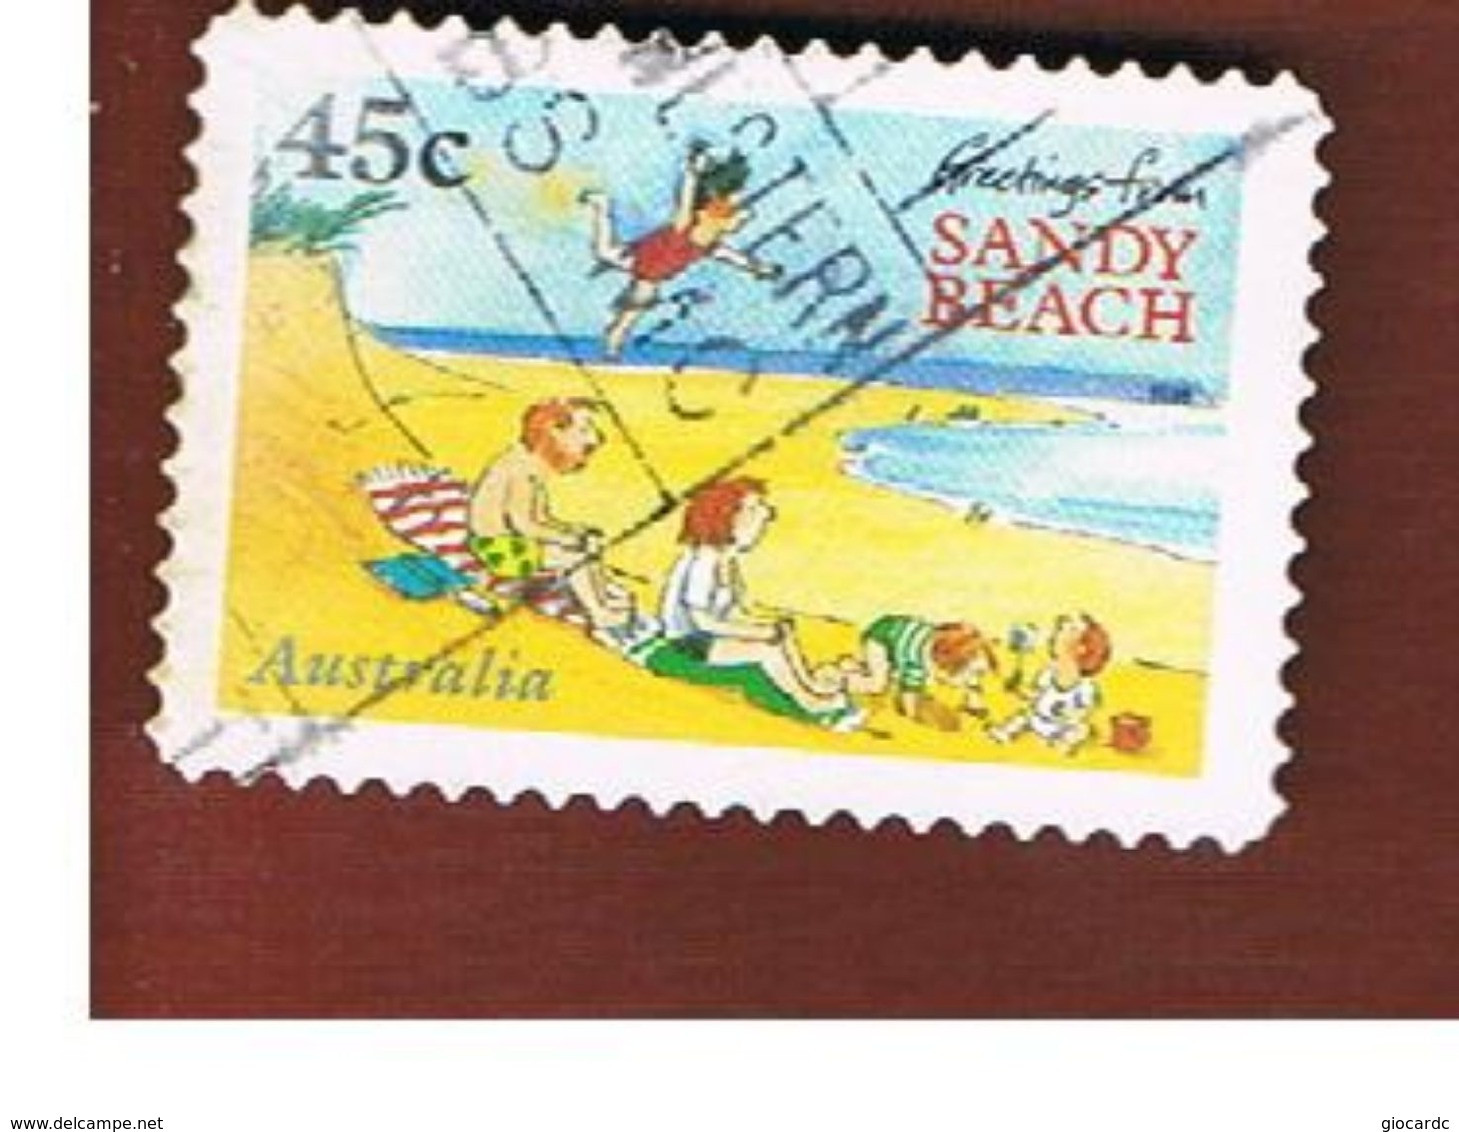 AUSTRALIA  -  SG 1635 -      1996  BOOKS FOR CHILDREN: SANDY BEACH         -       USED - Usati